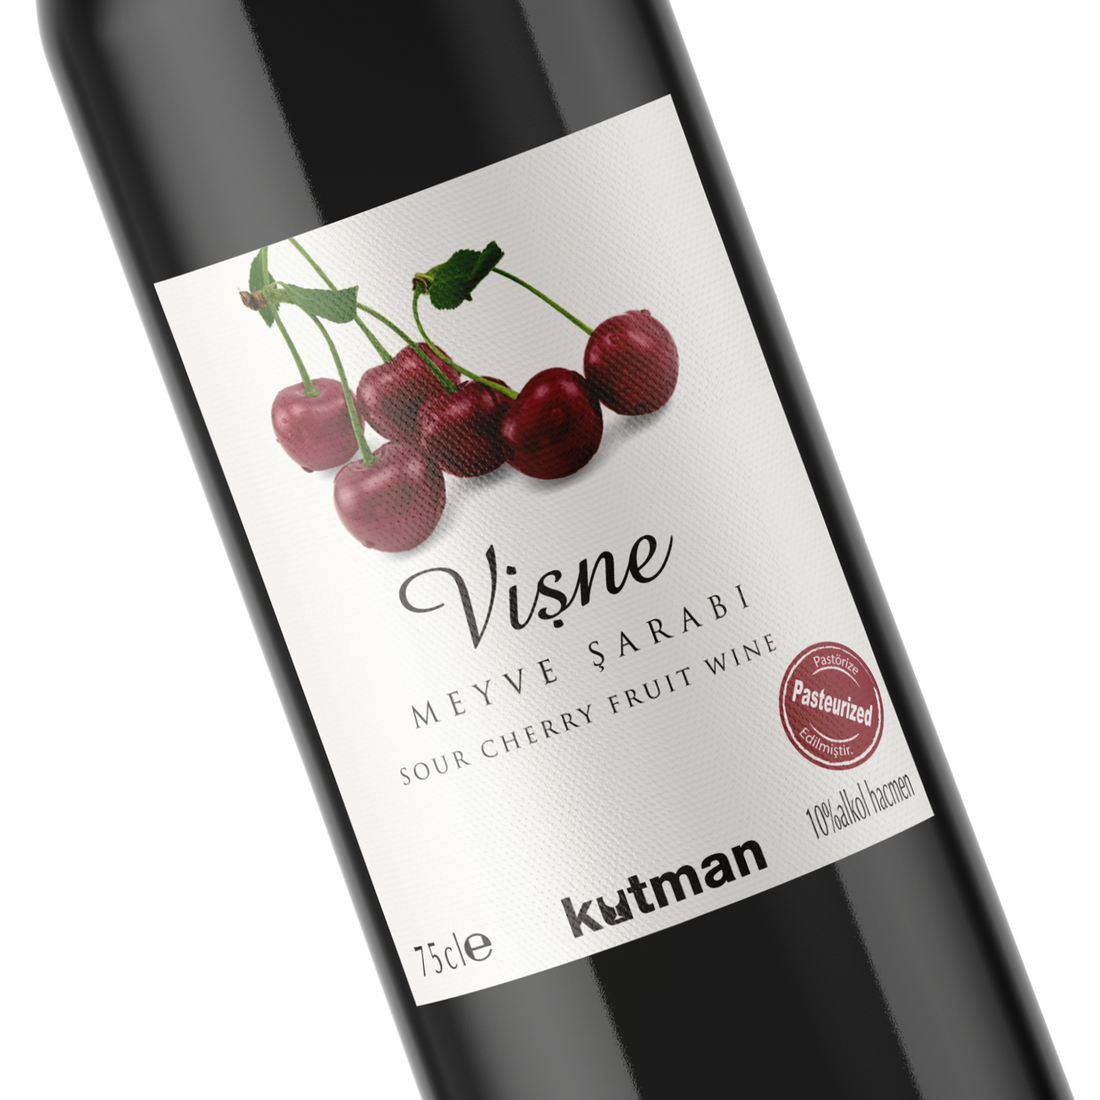 Kutman Sour Cherry Fruit Wine 750ml Turkish Fruit Wine | Kutman Visne Meyve Sarabi | Sour Cherry Fruit Wine 